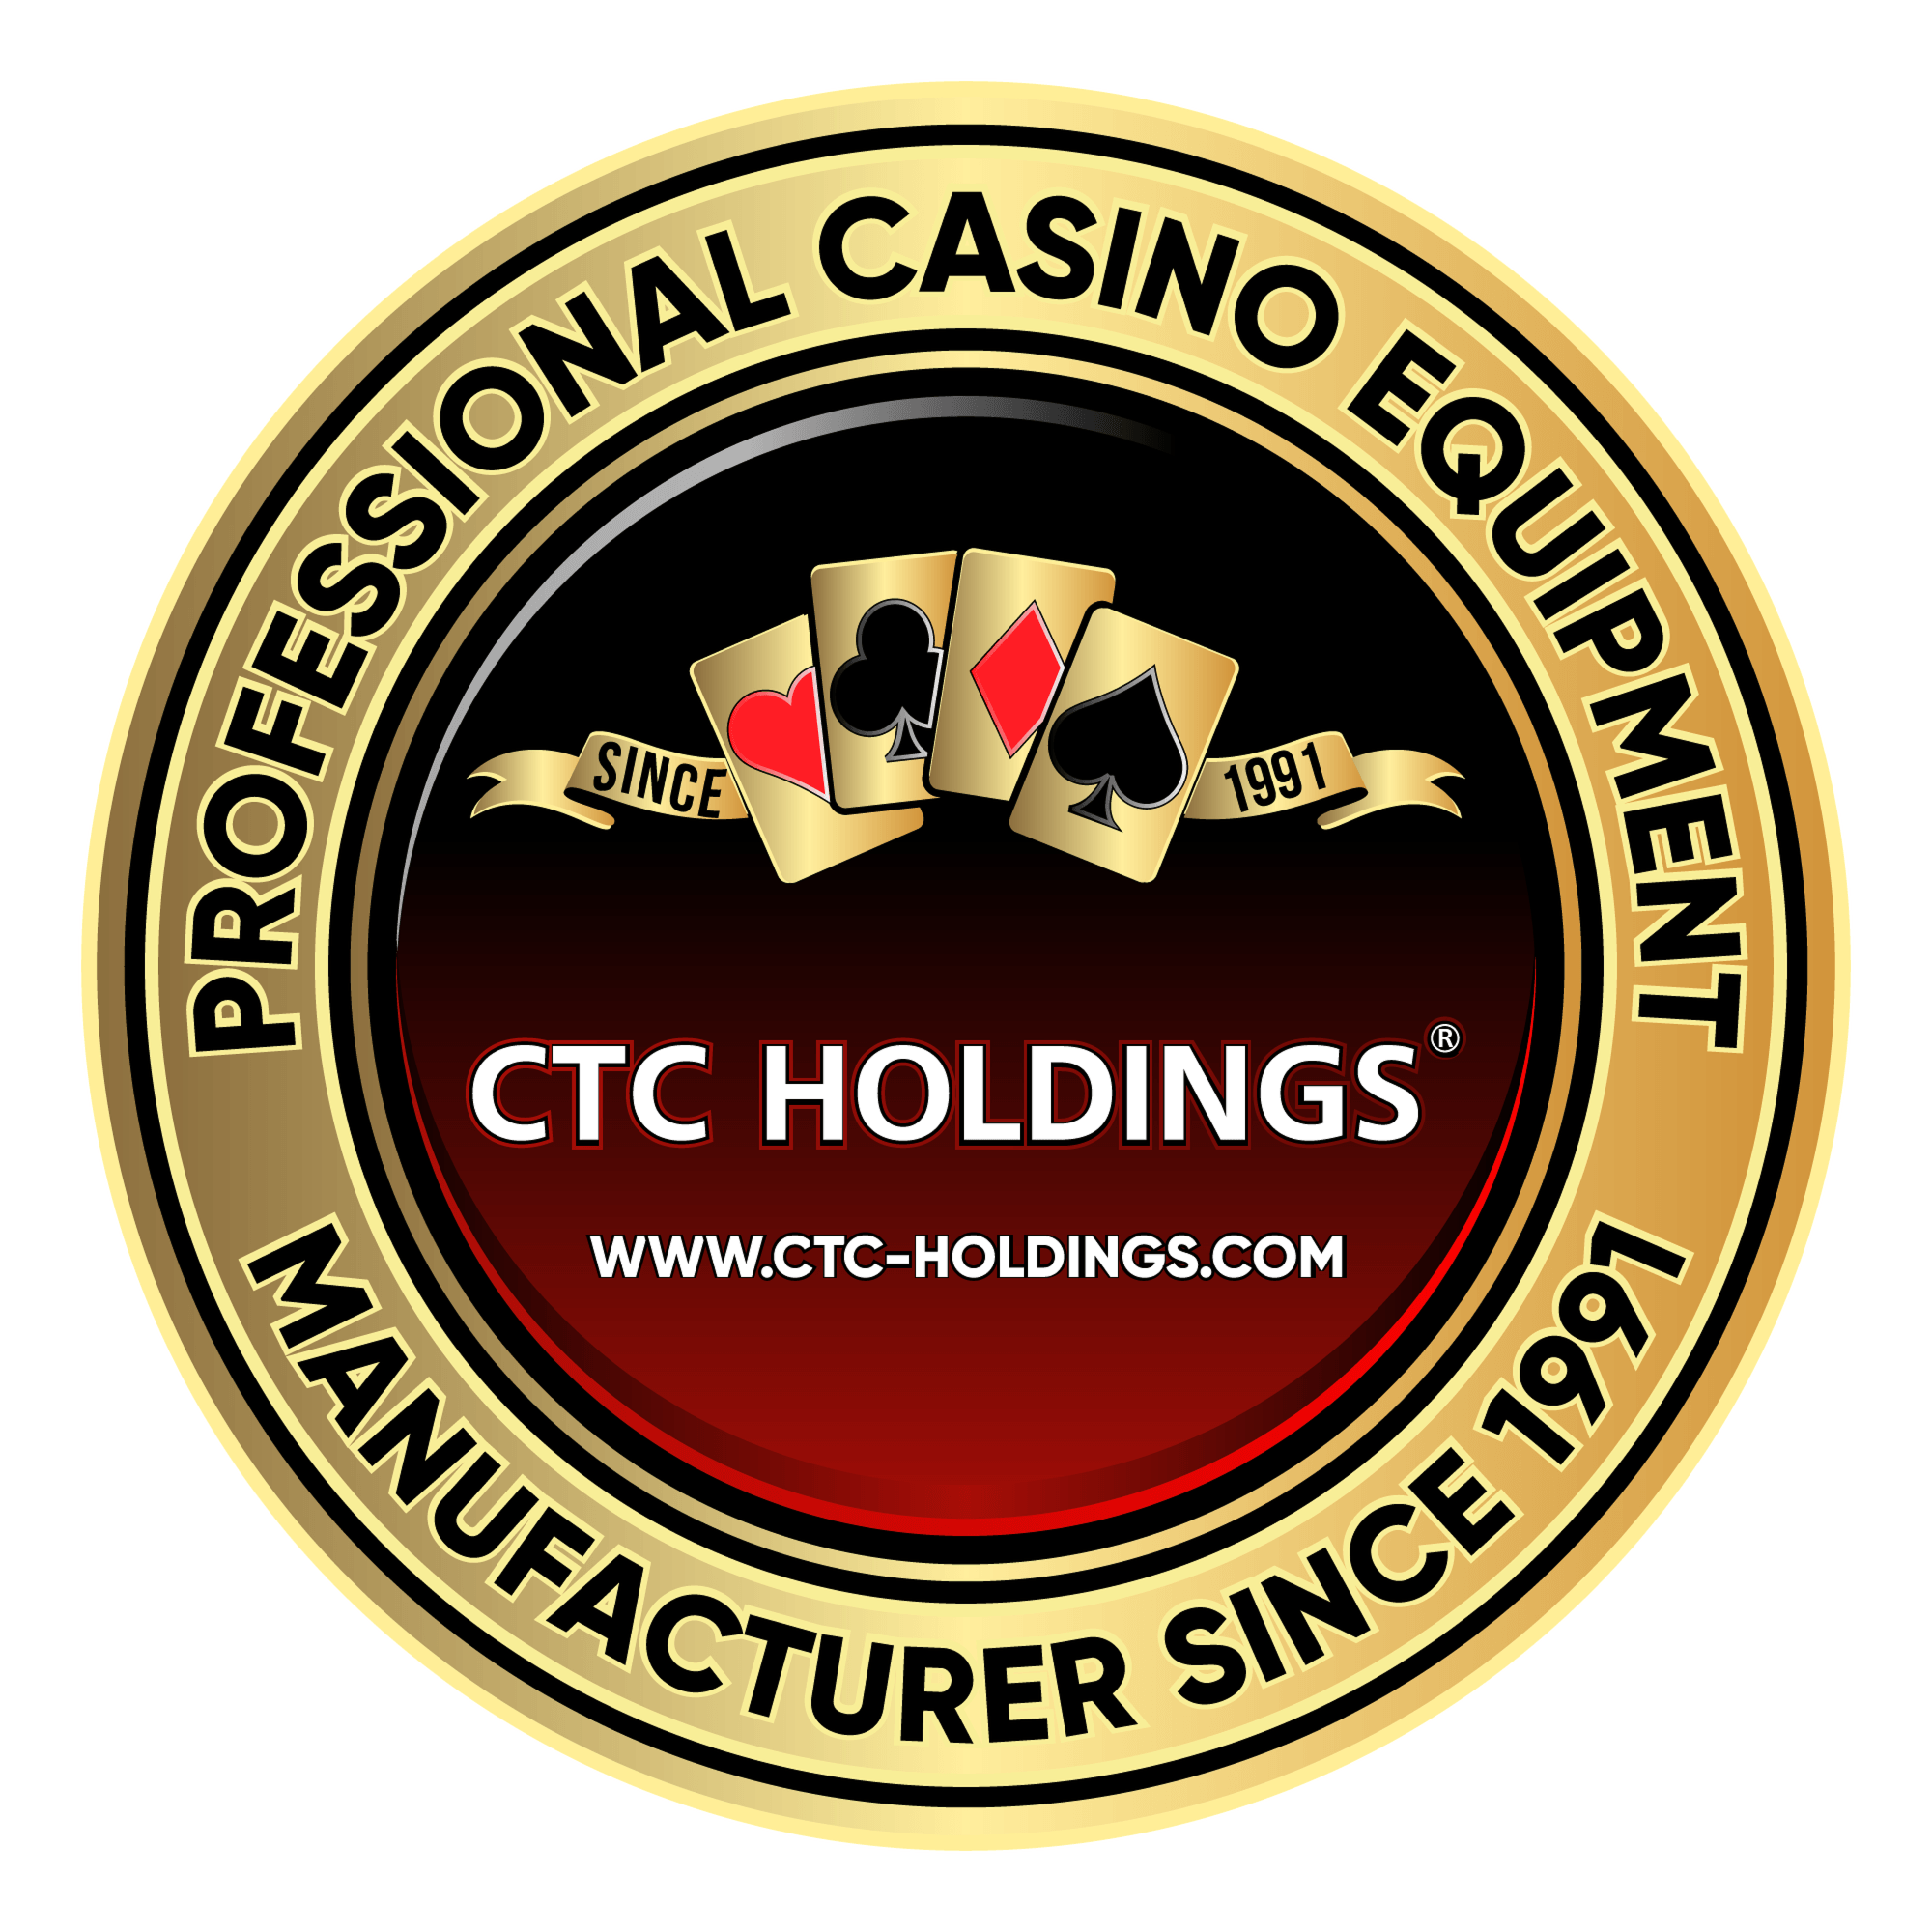 CTC Holdings